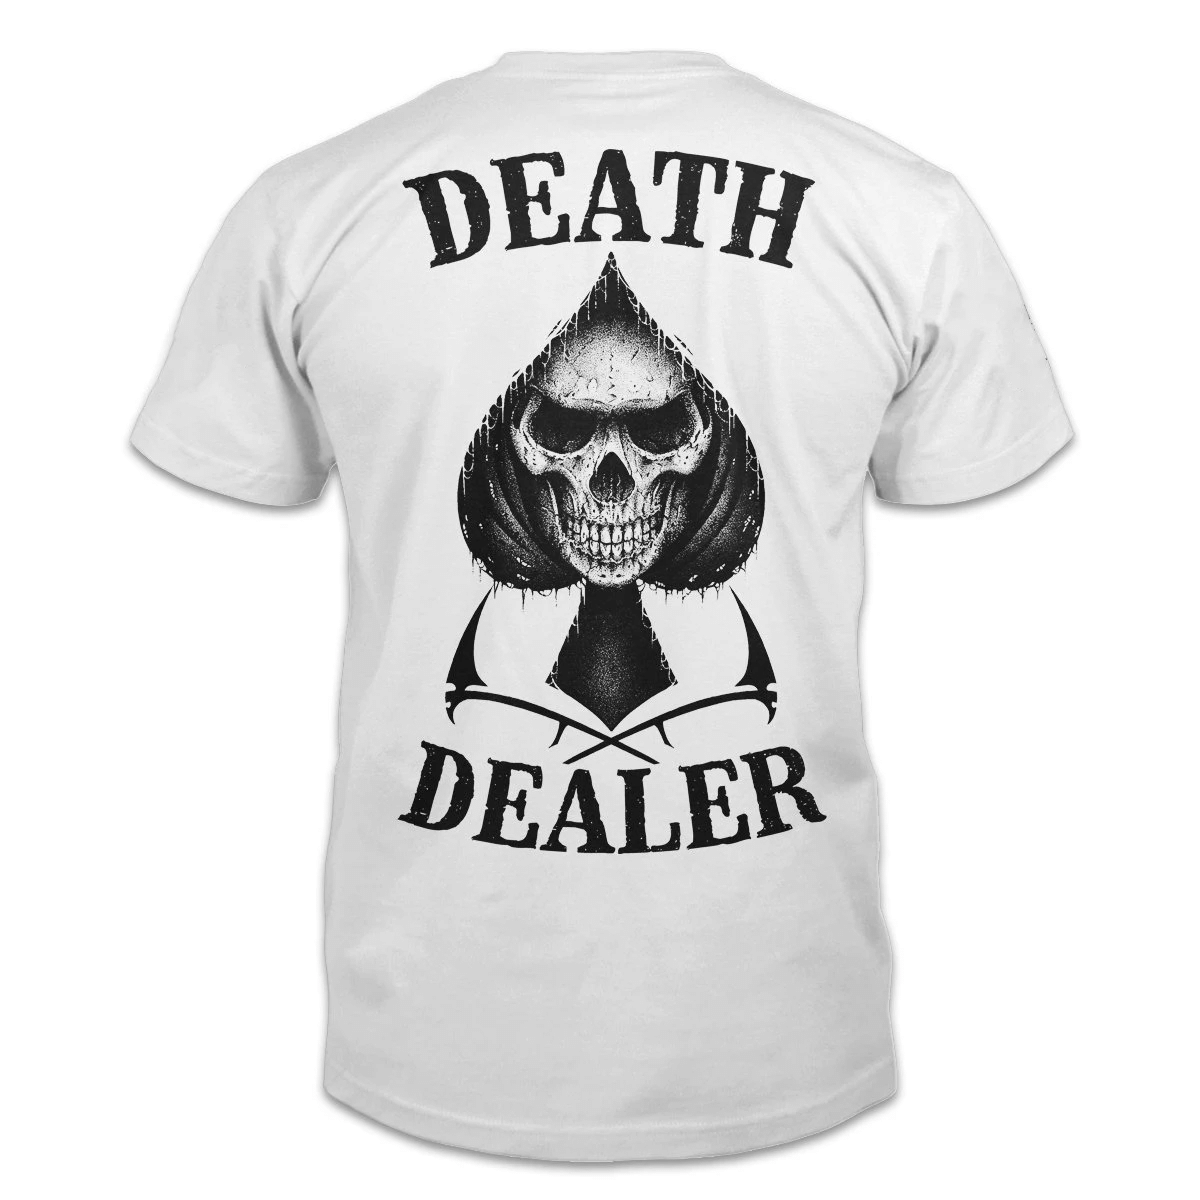 Funny Shirt, Best Gift Idea, Death Dealer T-Shirt KM1008 - Spreadstores